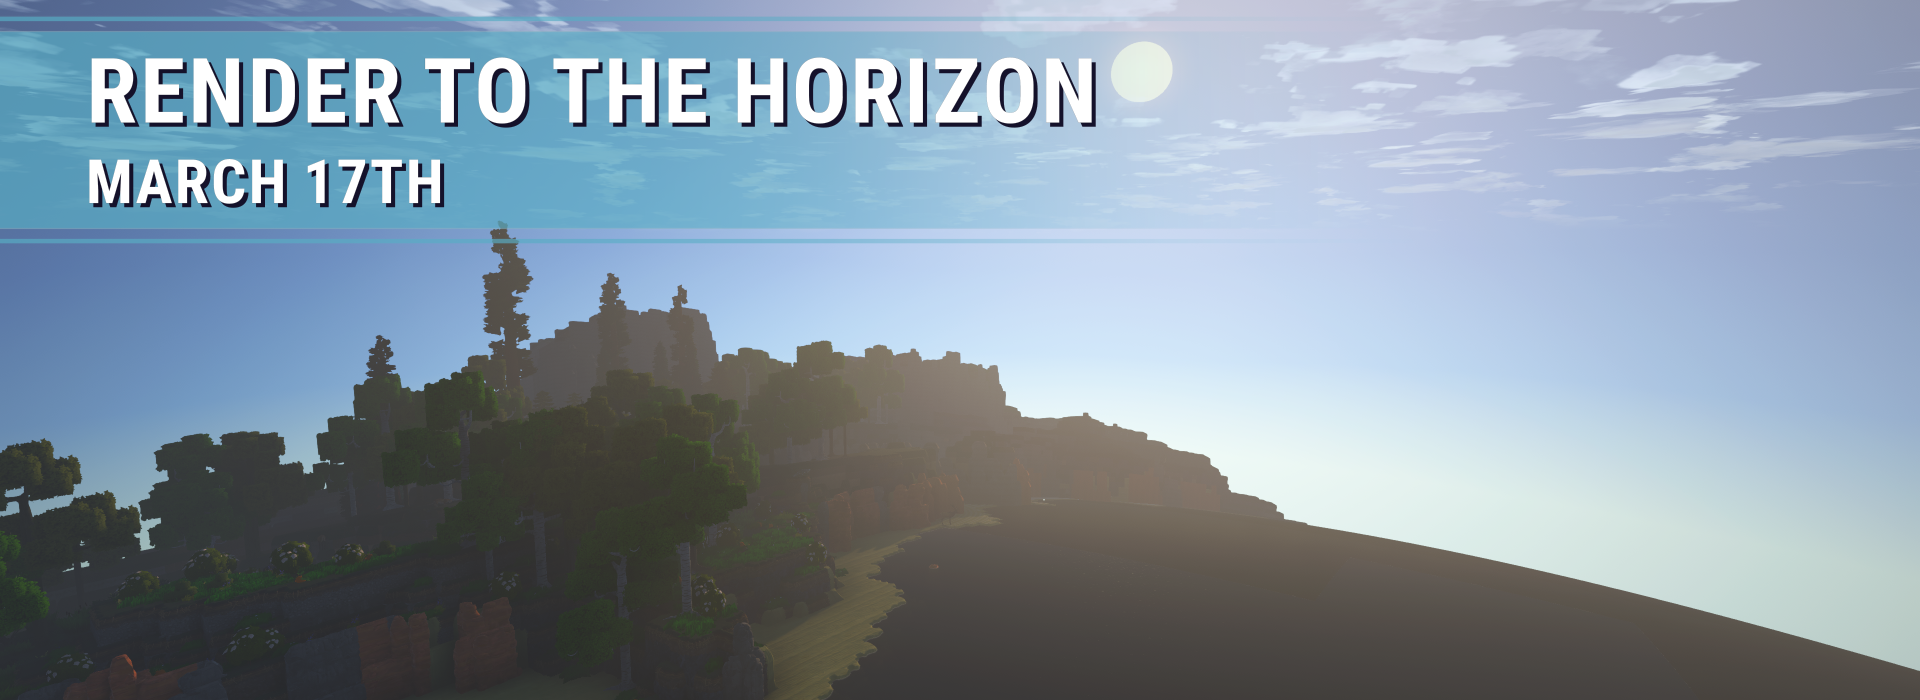 Horizon Forbidden West Alpha Build Leaked With Debug Enabled